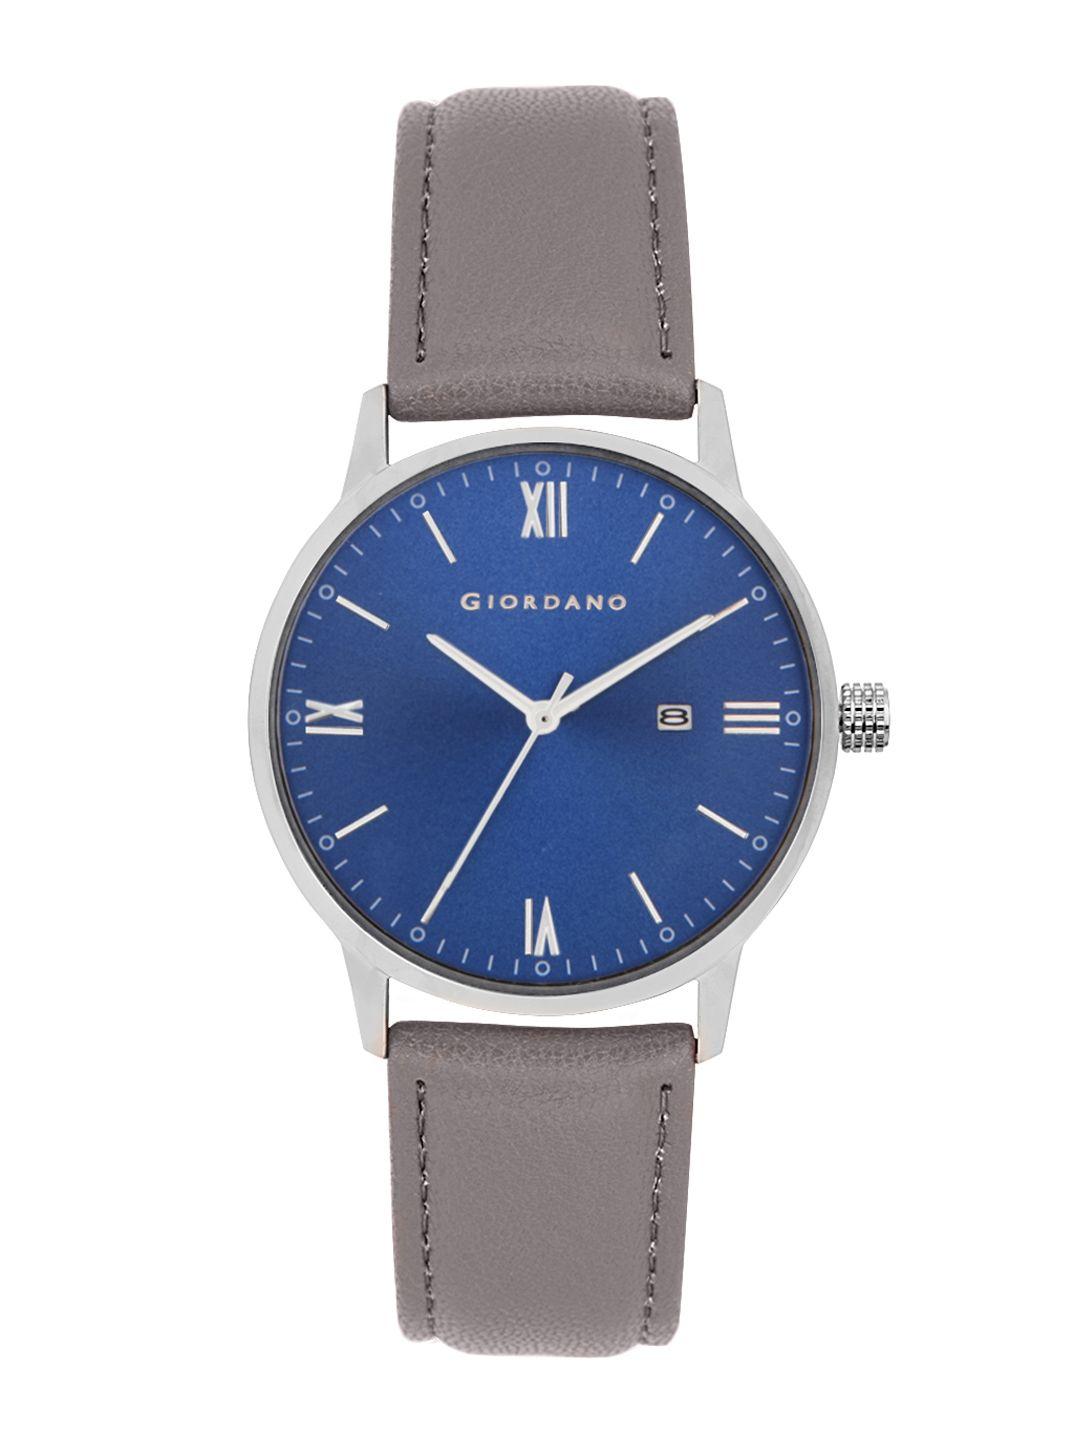 giordano men blue & grey leather analogue watch gd-4019-01